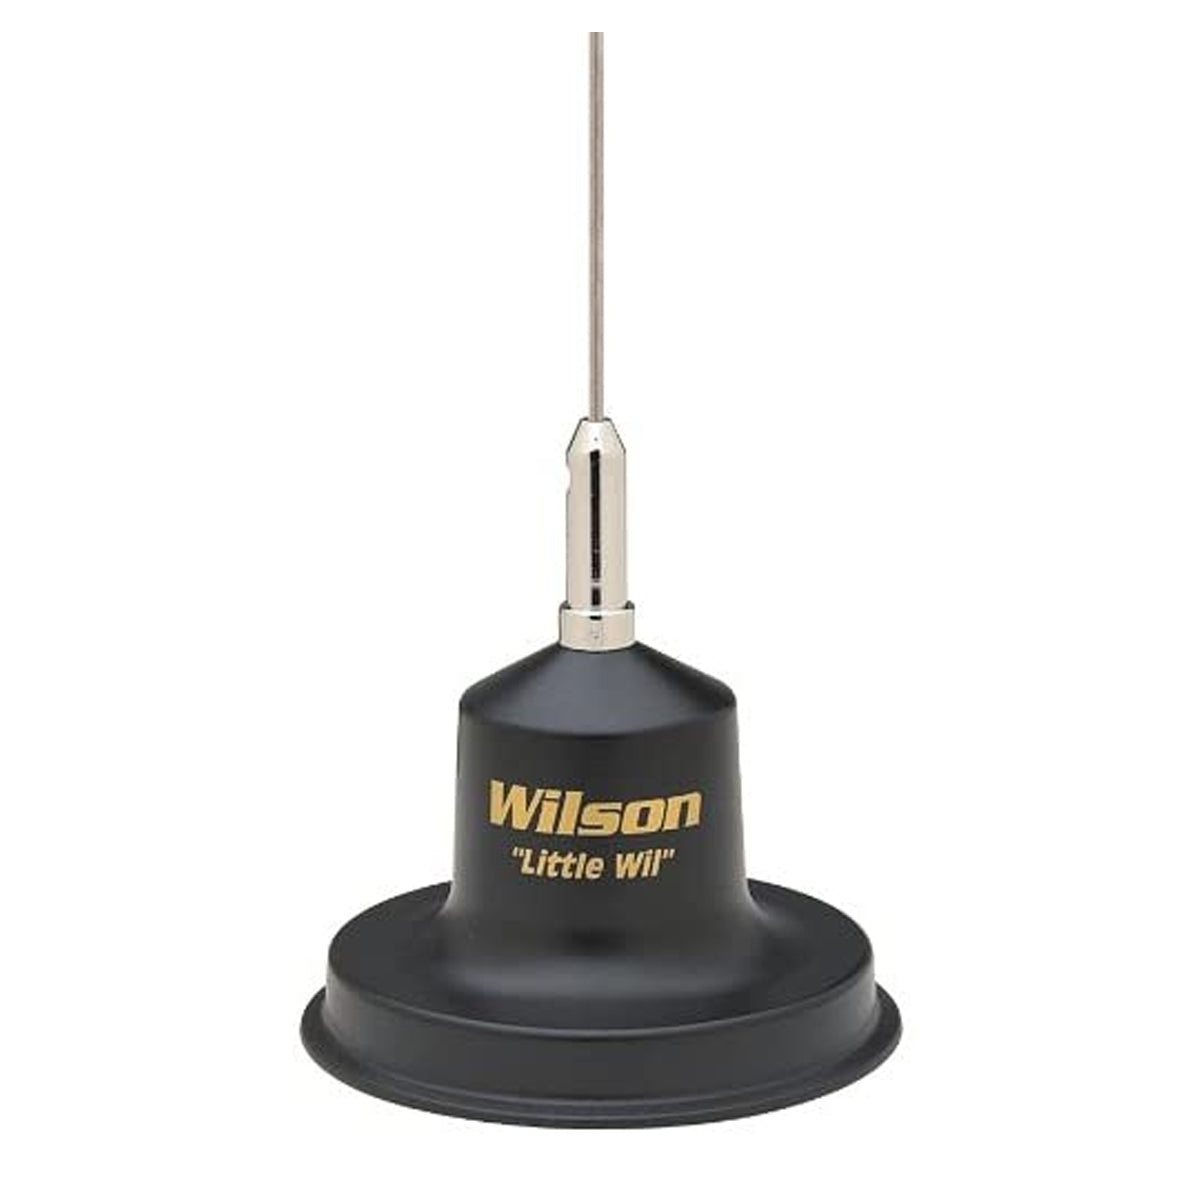 Wilson, Wilson "Little Wil" Antenna